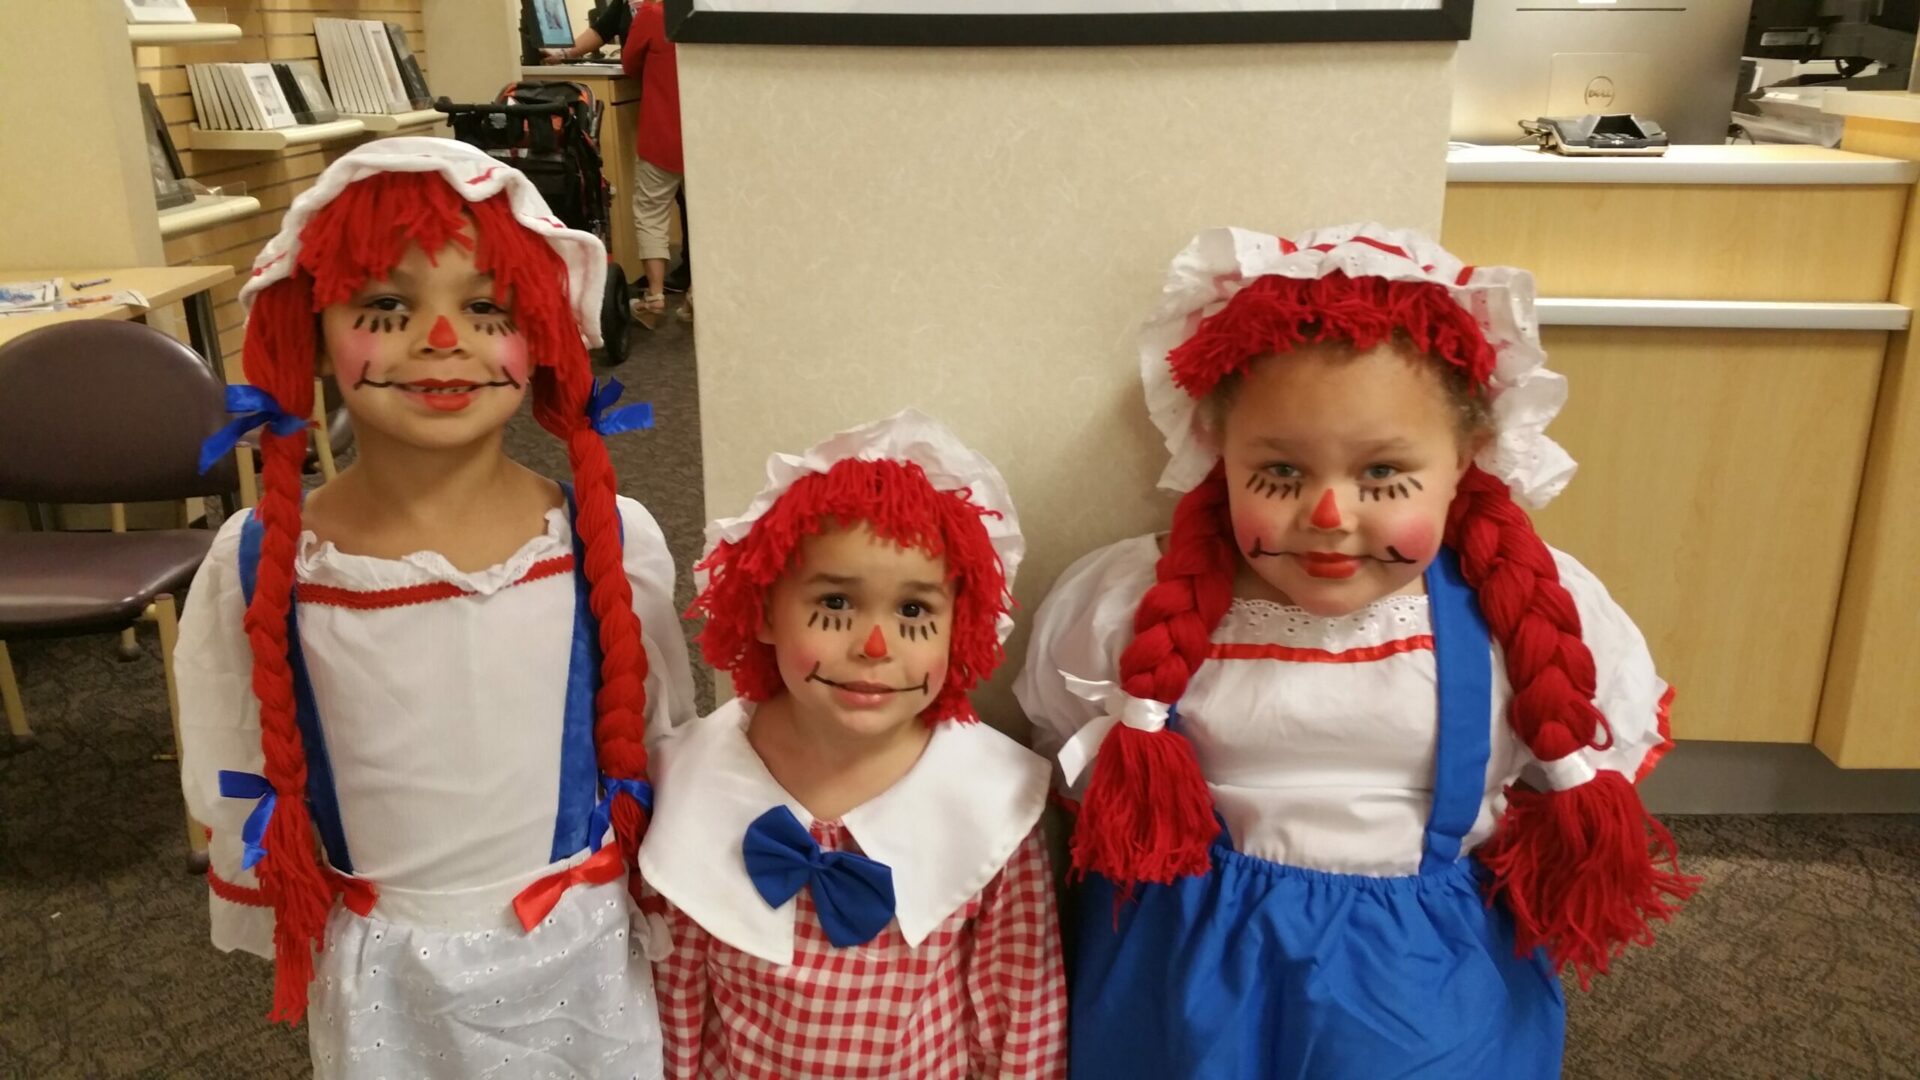 Rag Dolls Face Paint on Three Kids